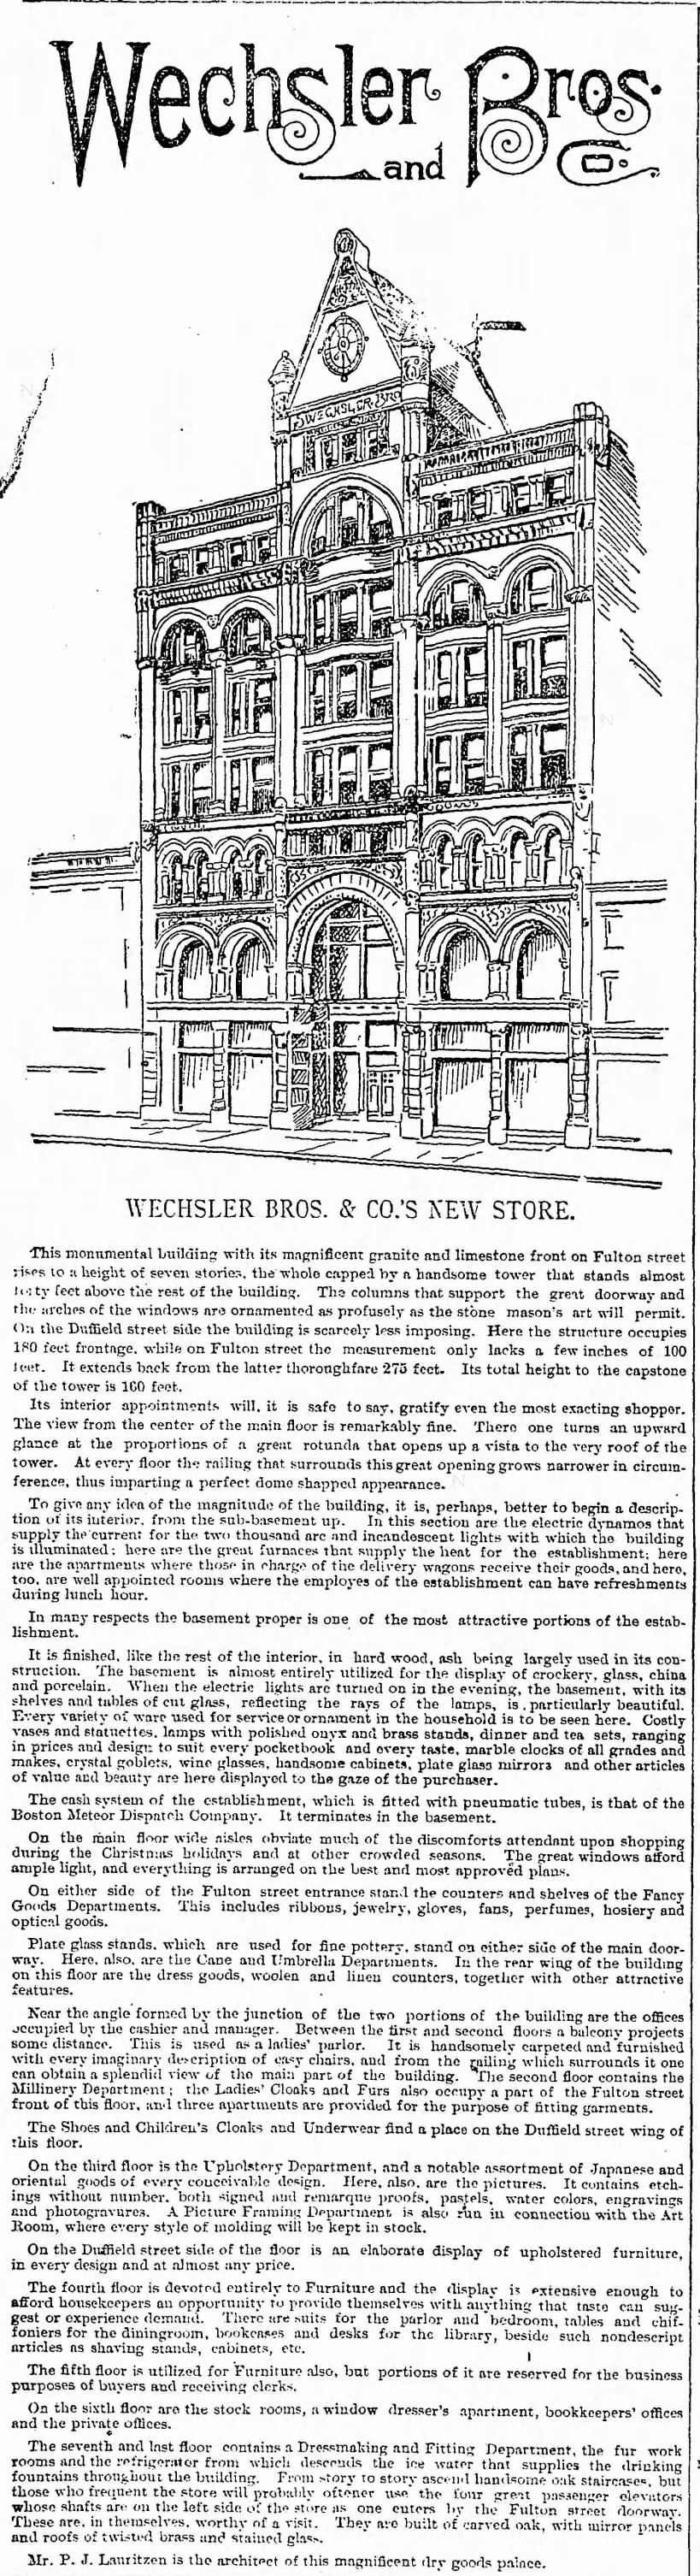 Wechsler Bros. & Co.’s New Store